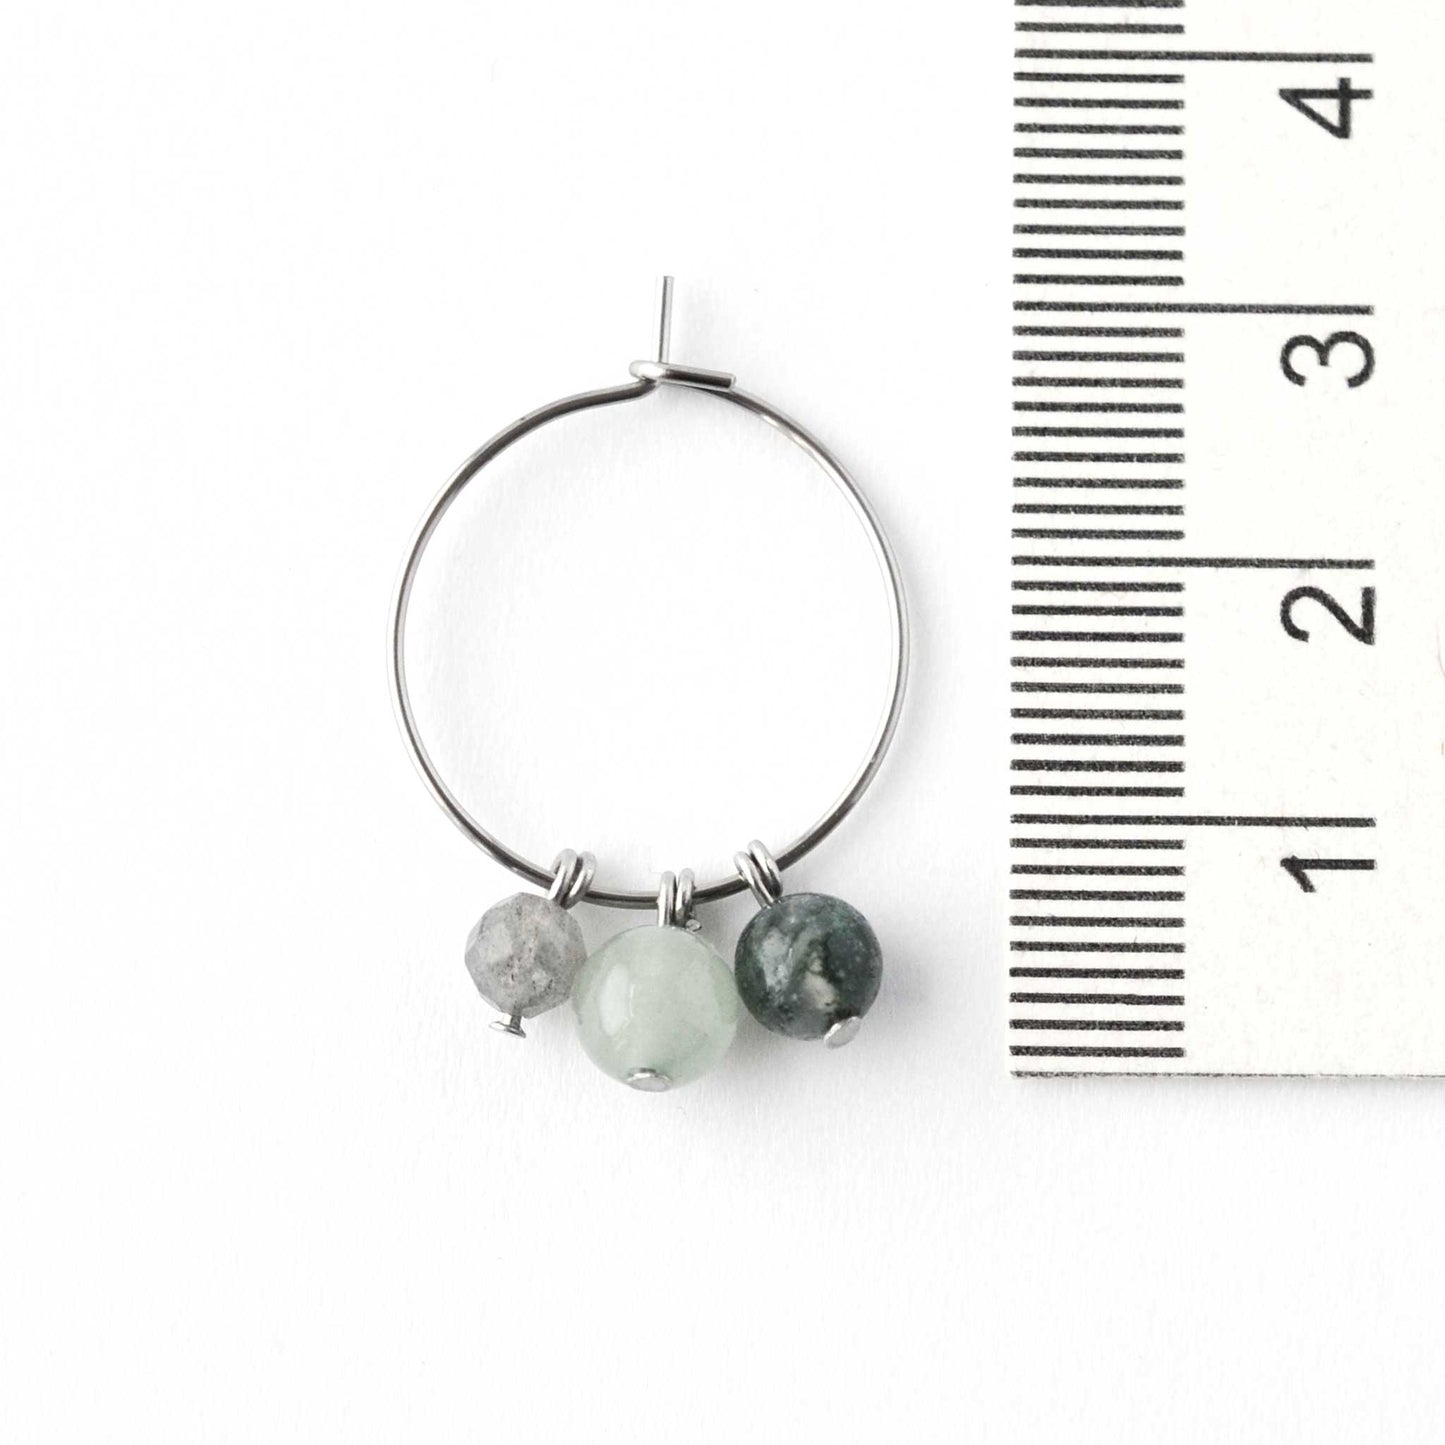 2cm diameter hypoallergenic hoop earring with green gemstone beads next to ruler